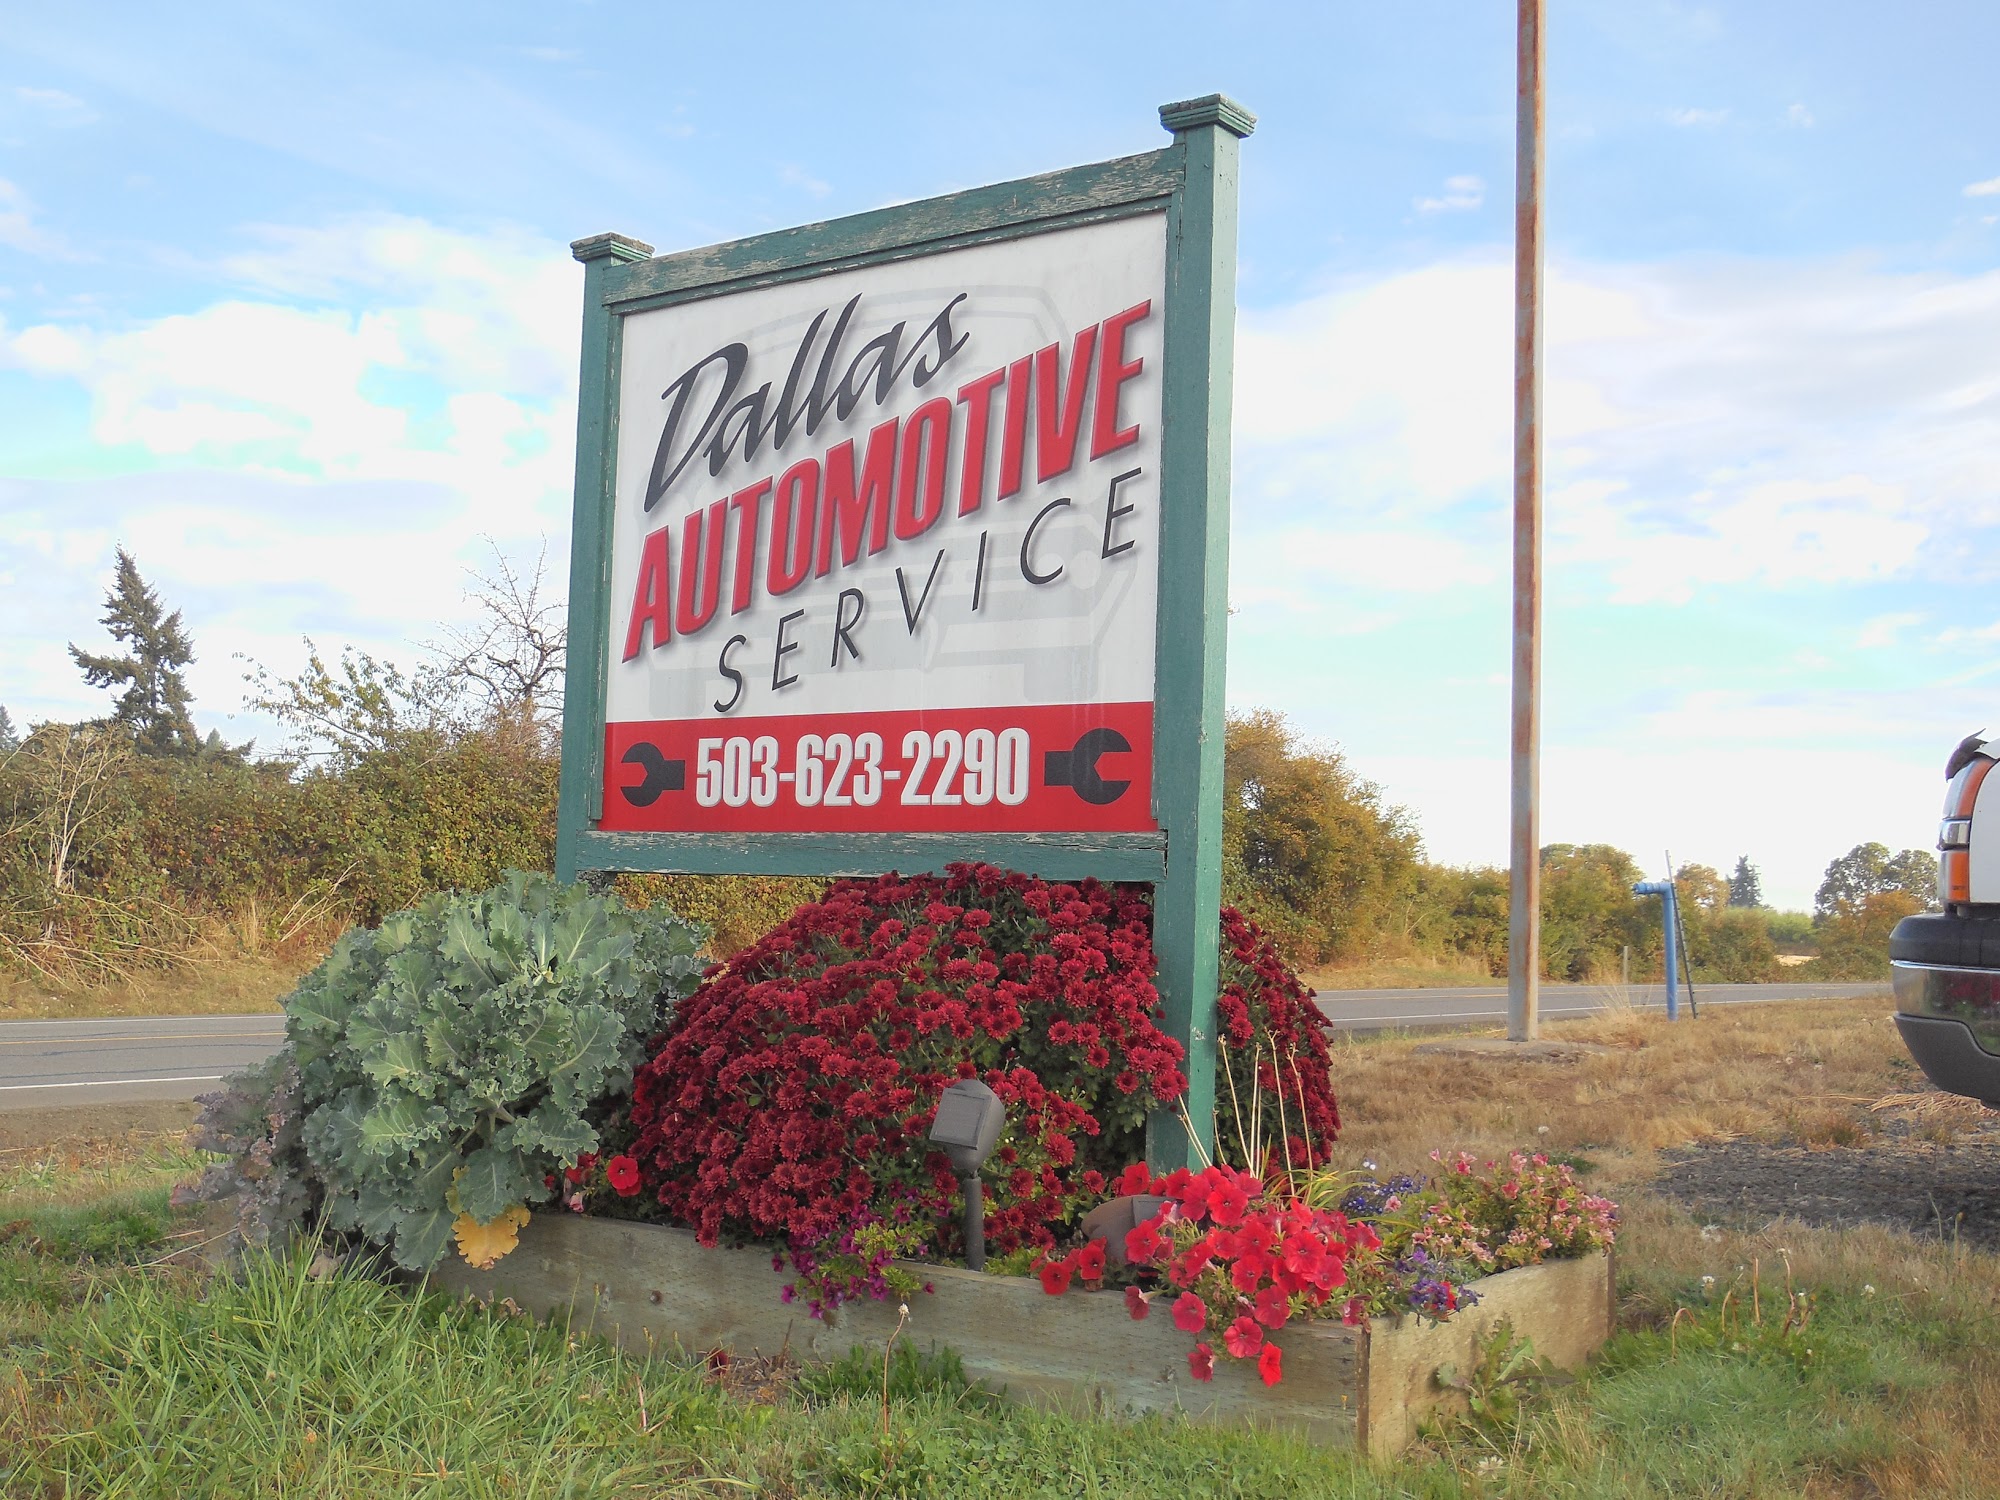 Dallas Automotive Service